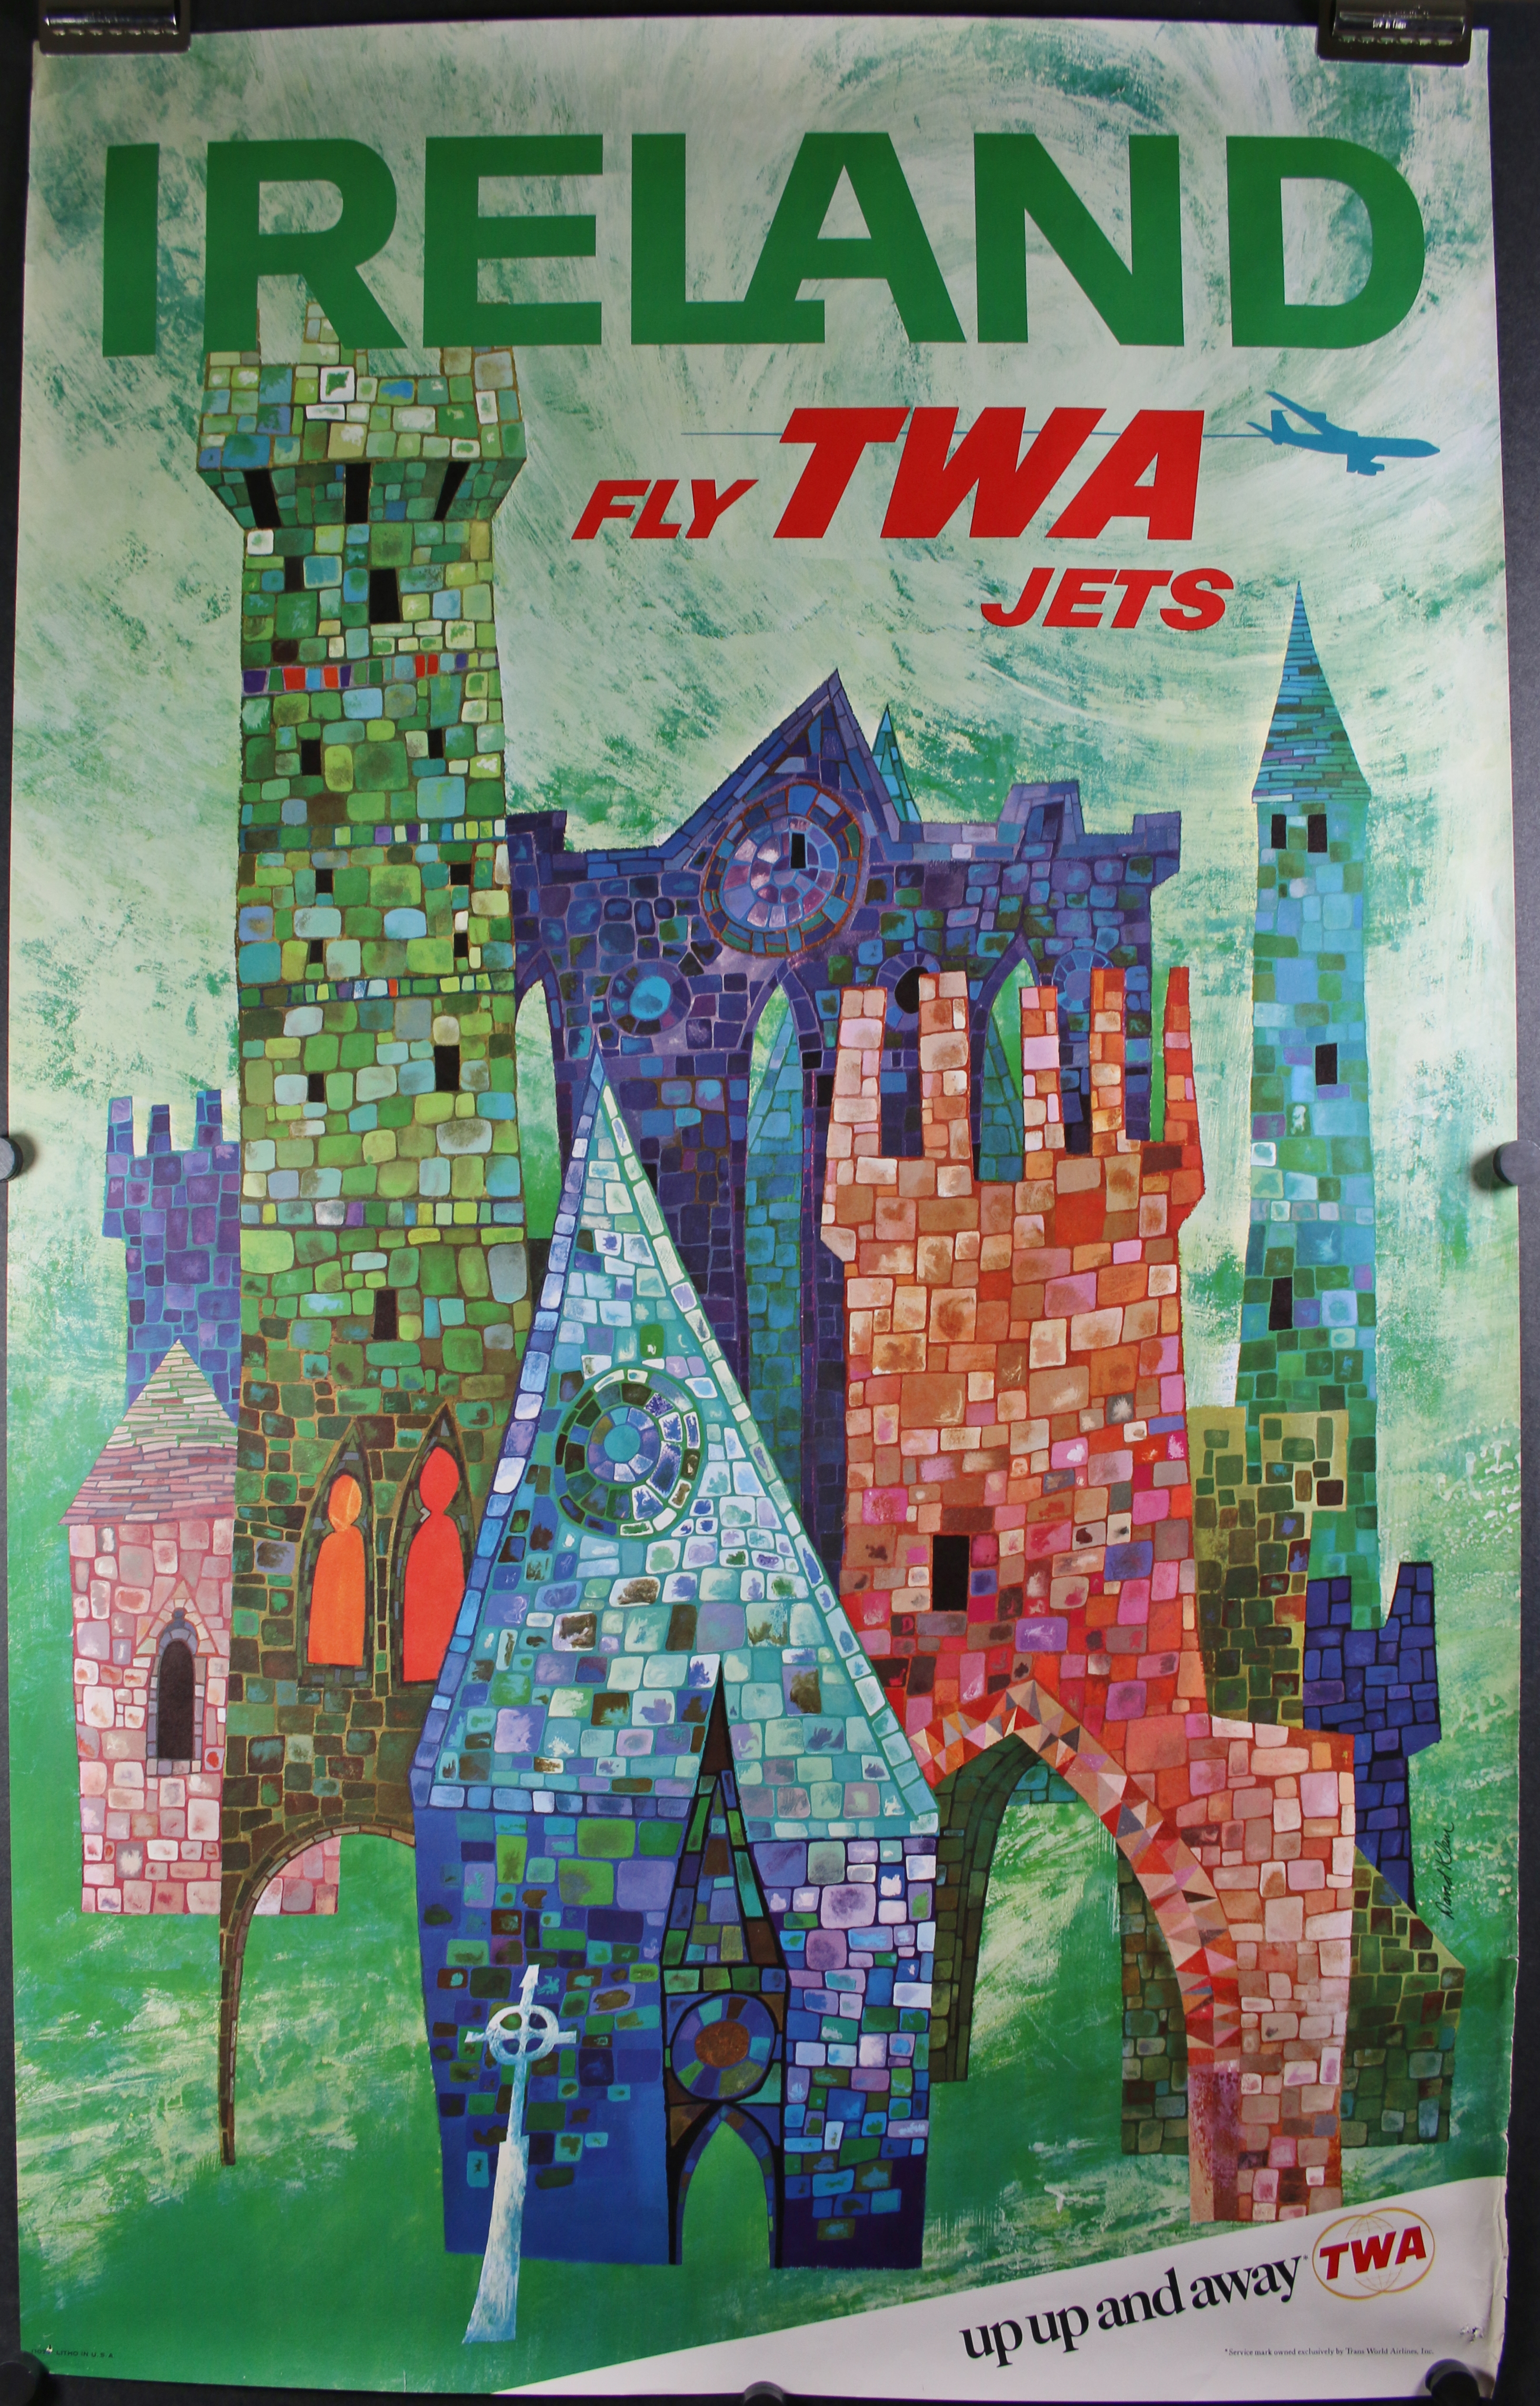 TWA Ireland 4589